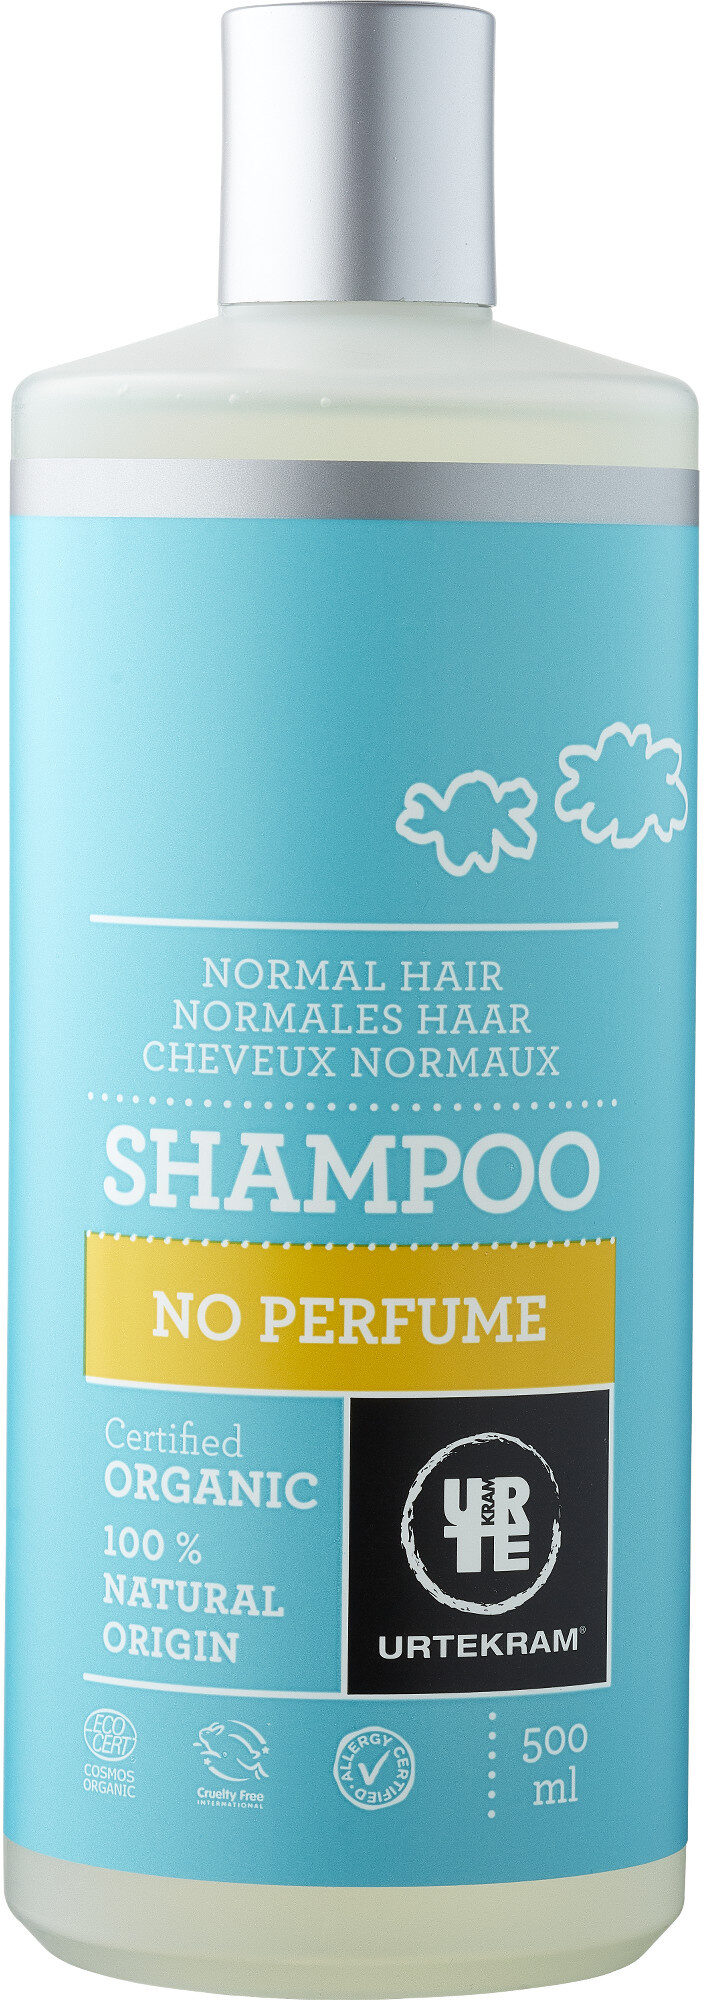 Shampoo no perfume - Produit - fr